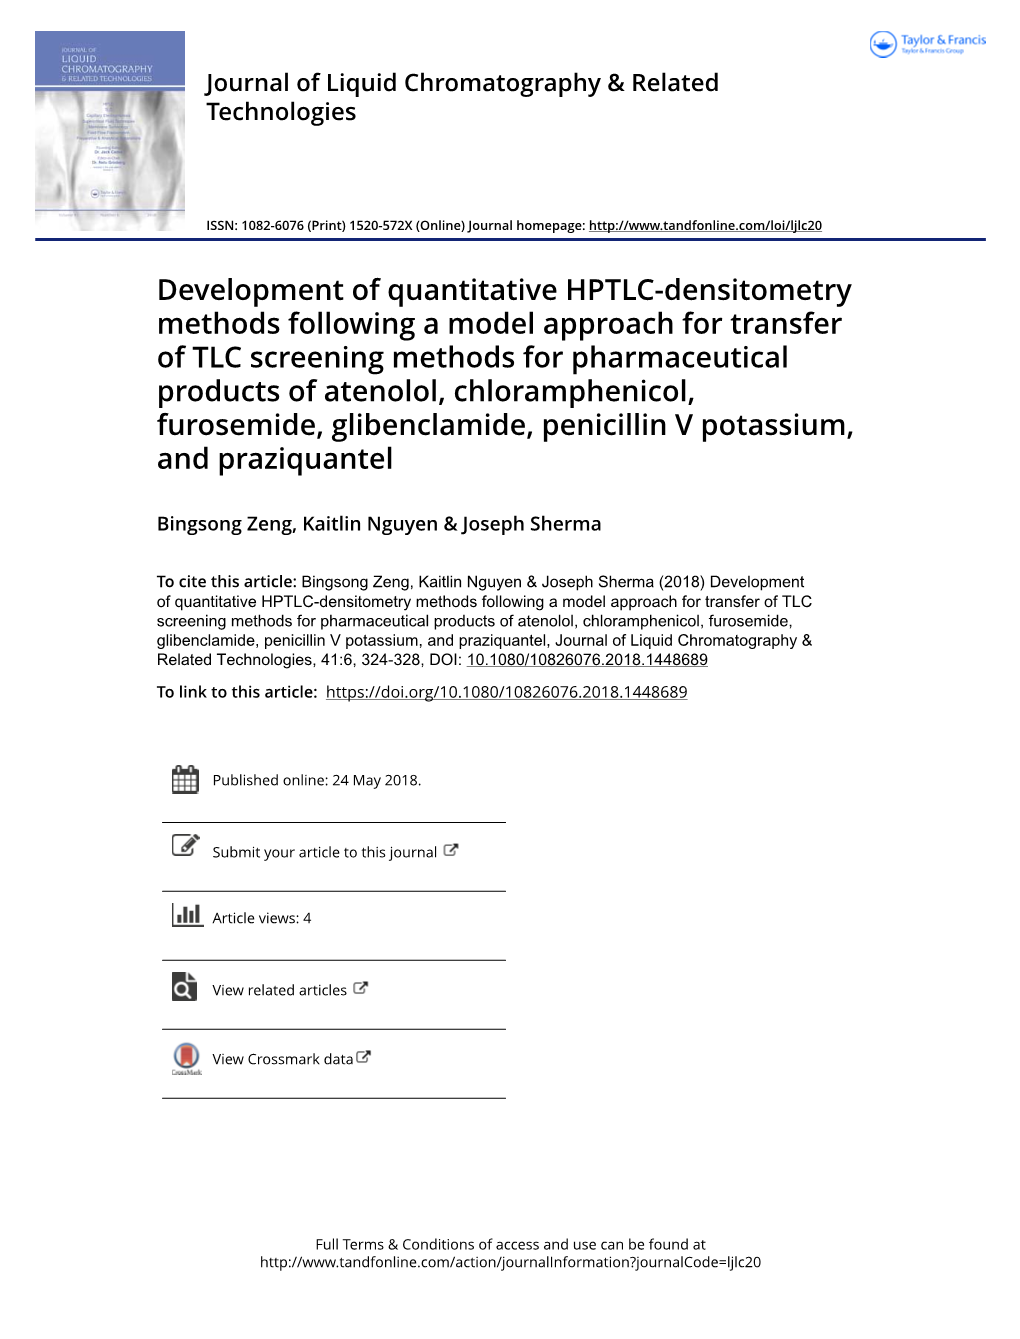 Development of Quantitative HPTLC-Densitometry Methods